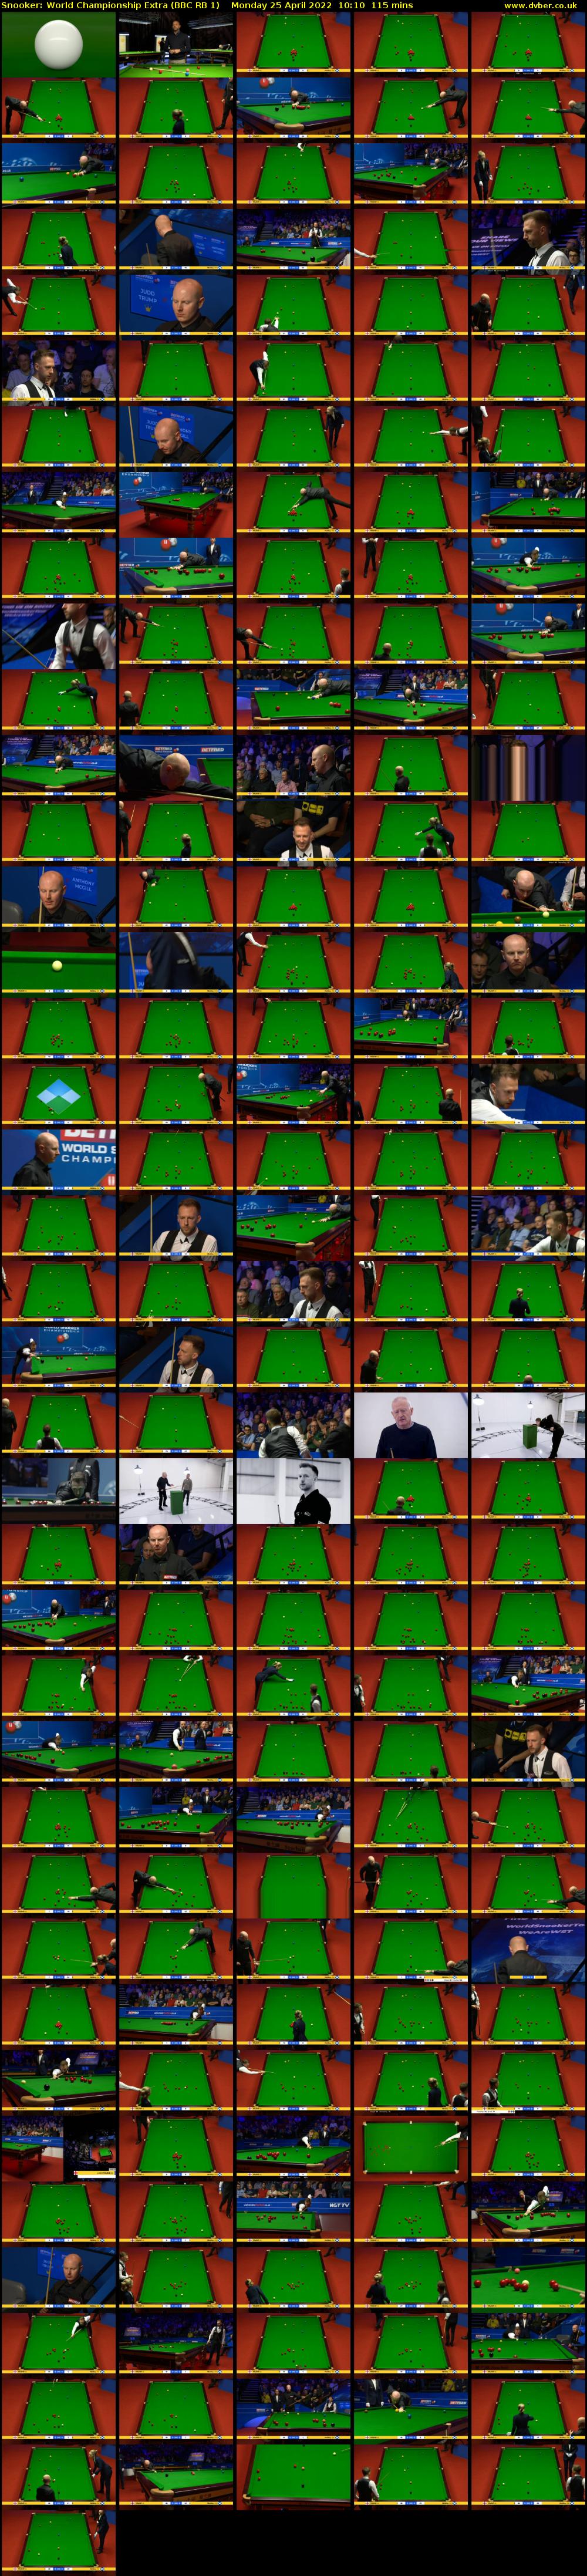 Snooker: World Championship Extra (BBC RB 1) Monday 25 April 2022 10:10 - 12:05